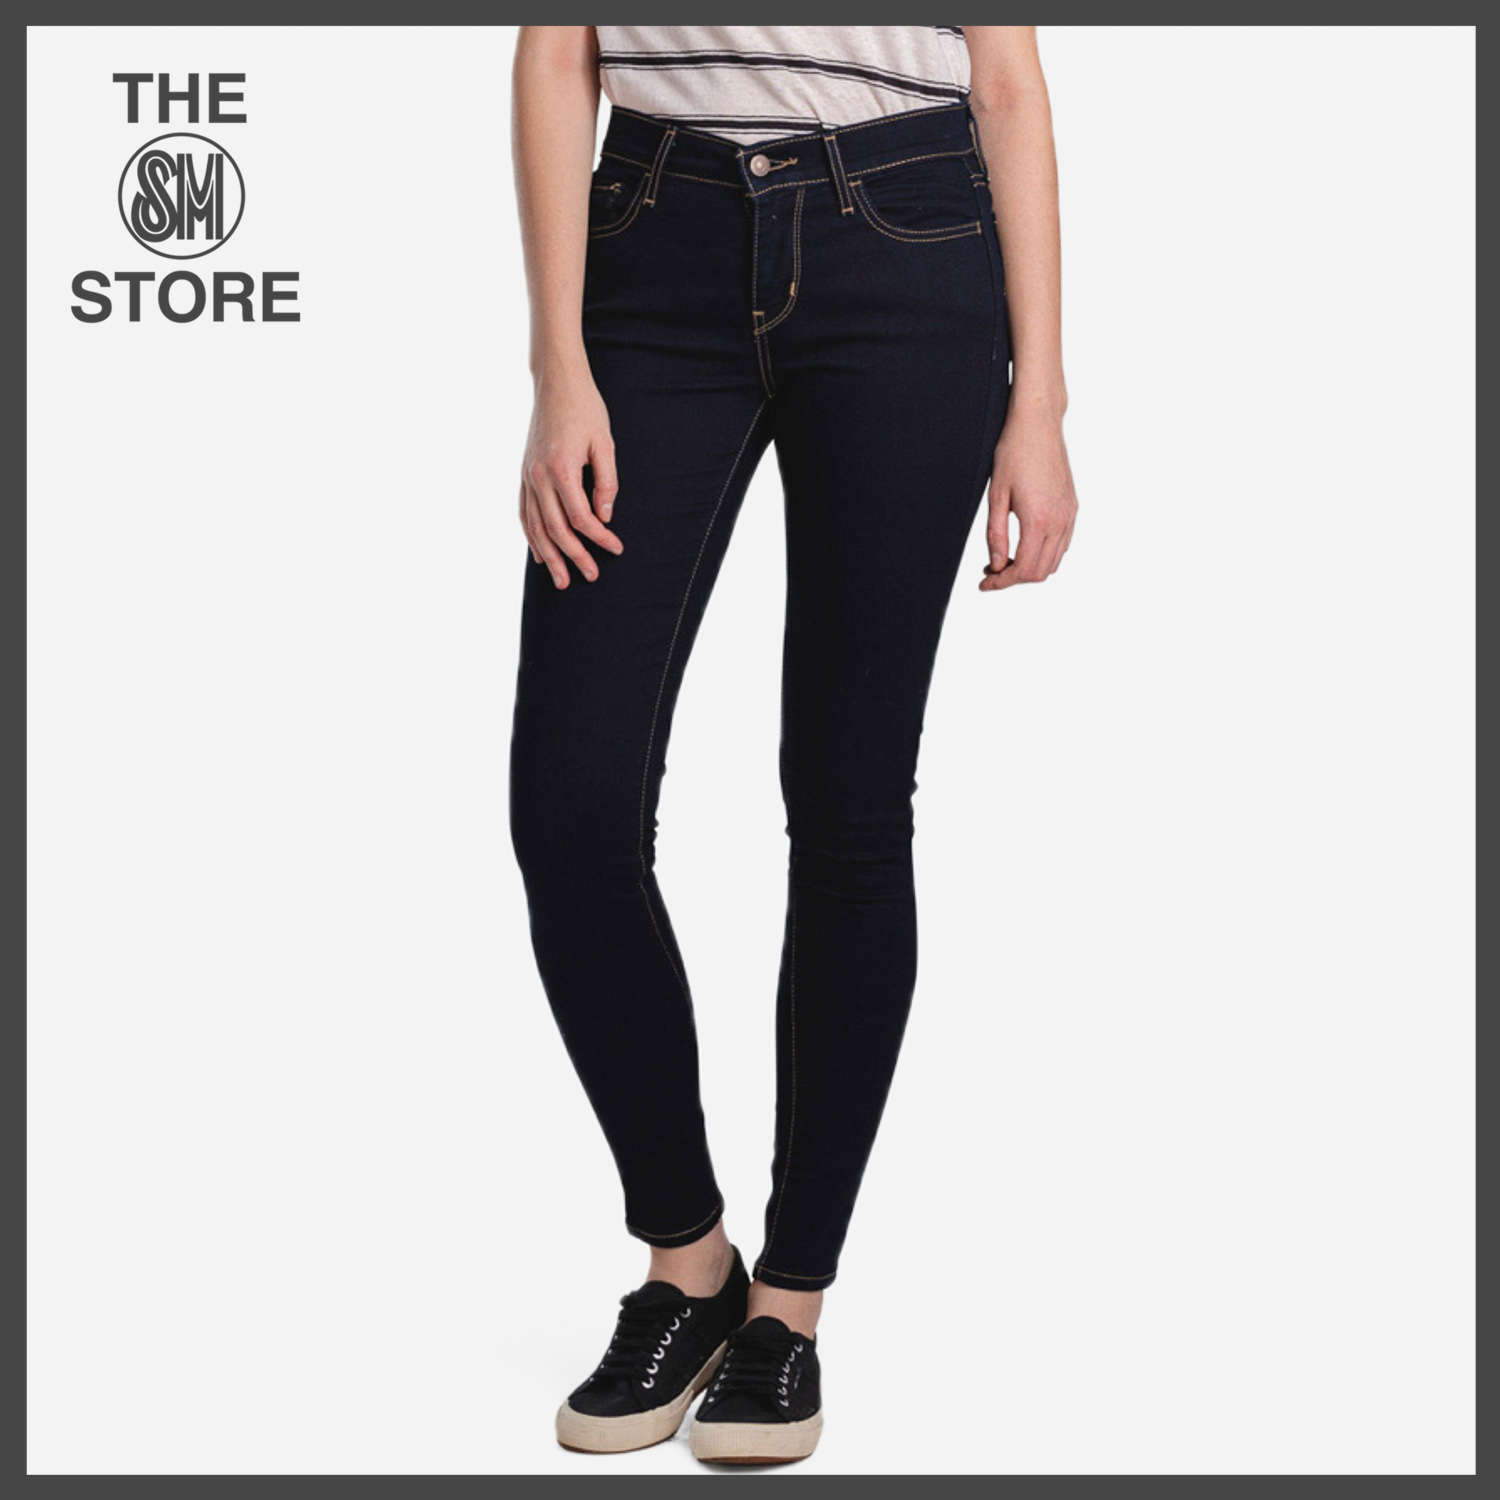 ladies levi's super skinny jeans